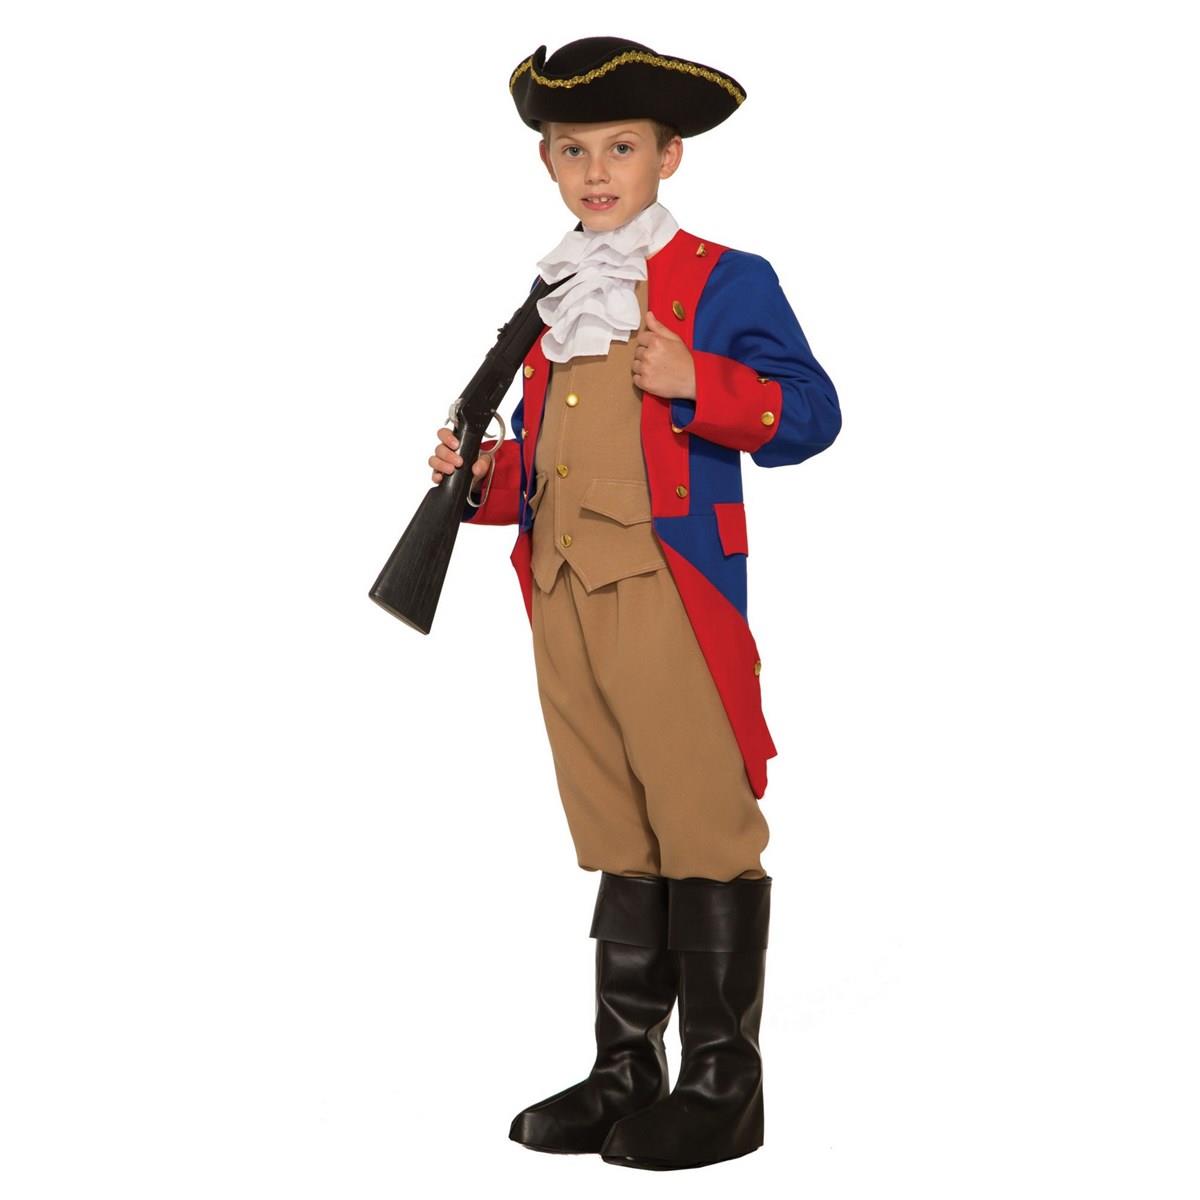 Picture of Forum Novelties 277386 Halloween Boys Patriotic Soldier Costume - Small